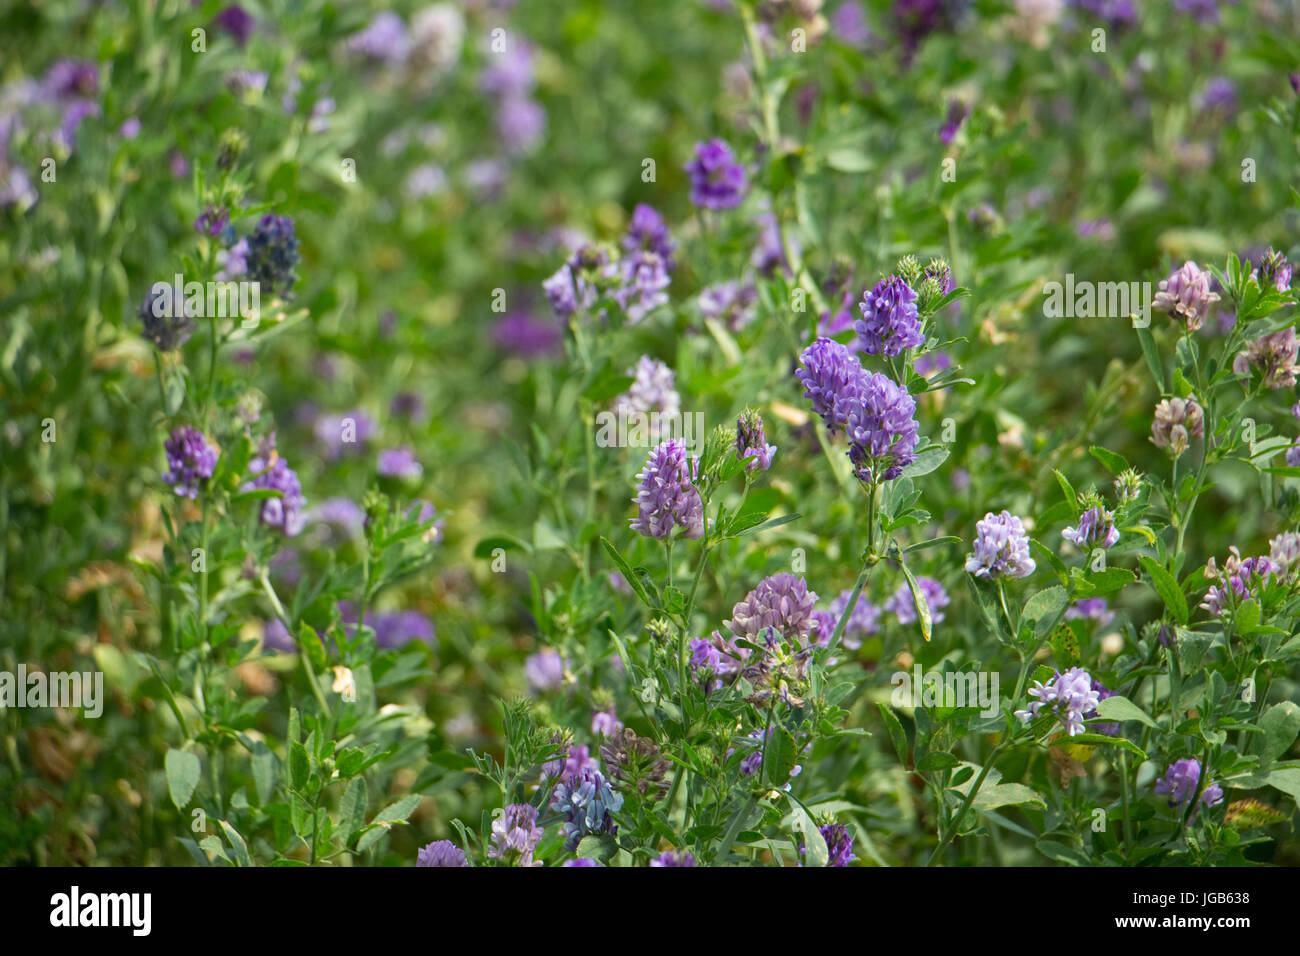 Crop of Lucerne / Alfalfa (Medicago sativa) in flower. Lincolnshire, England, UK Stock Photo